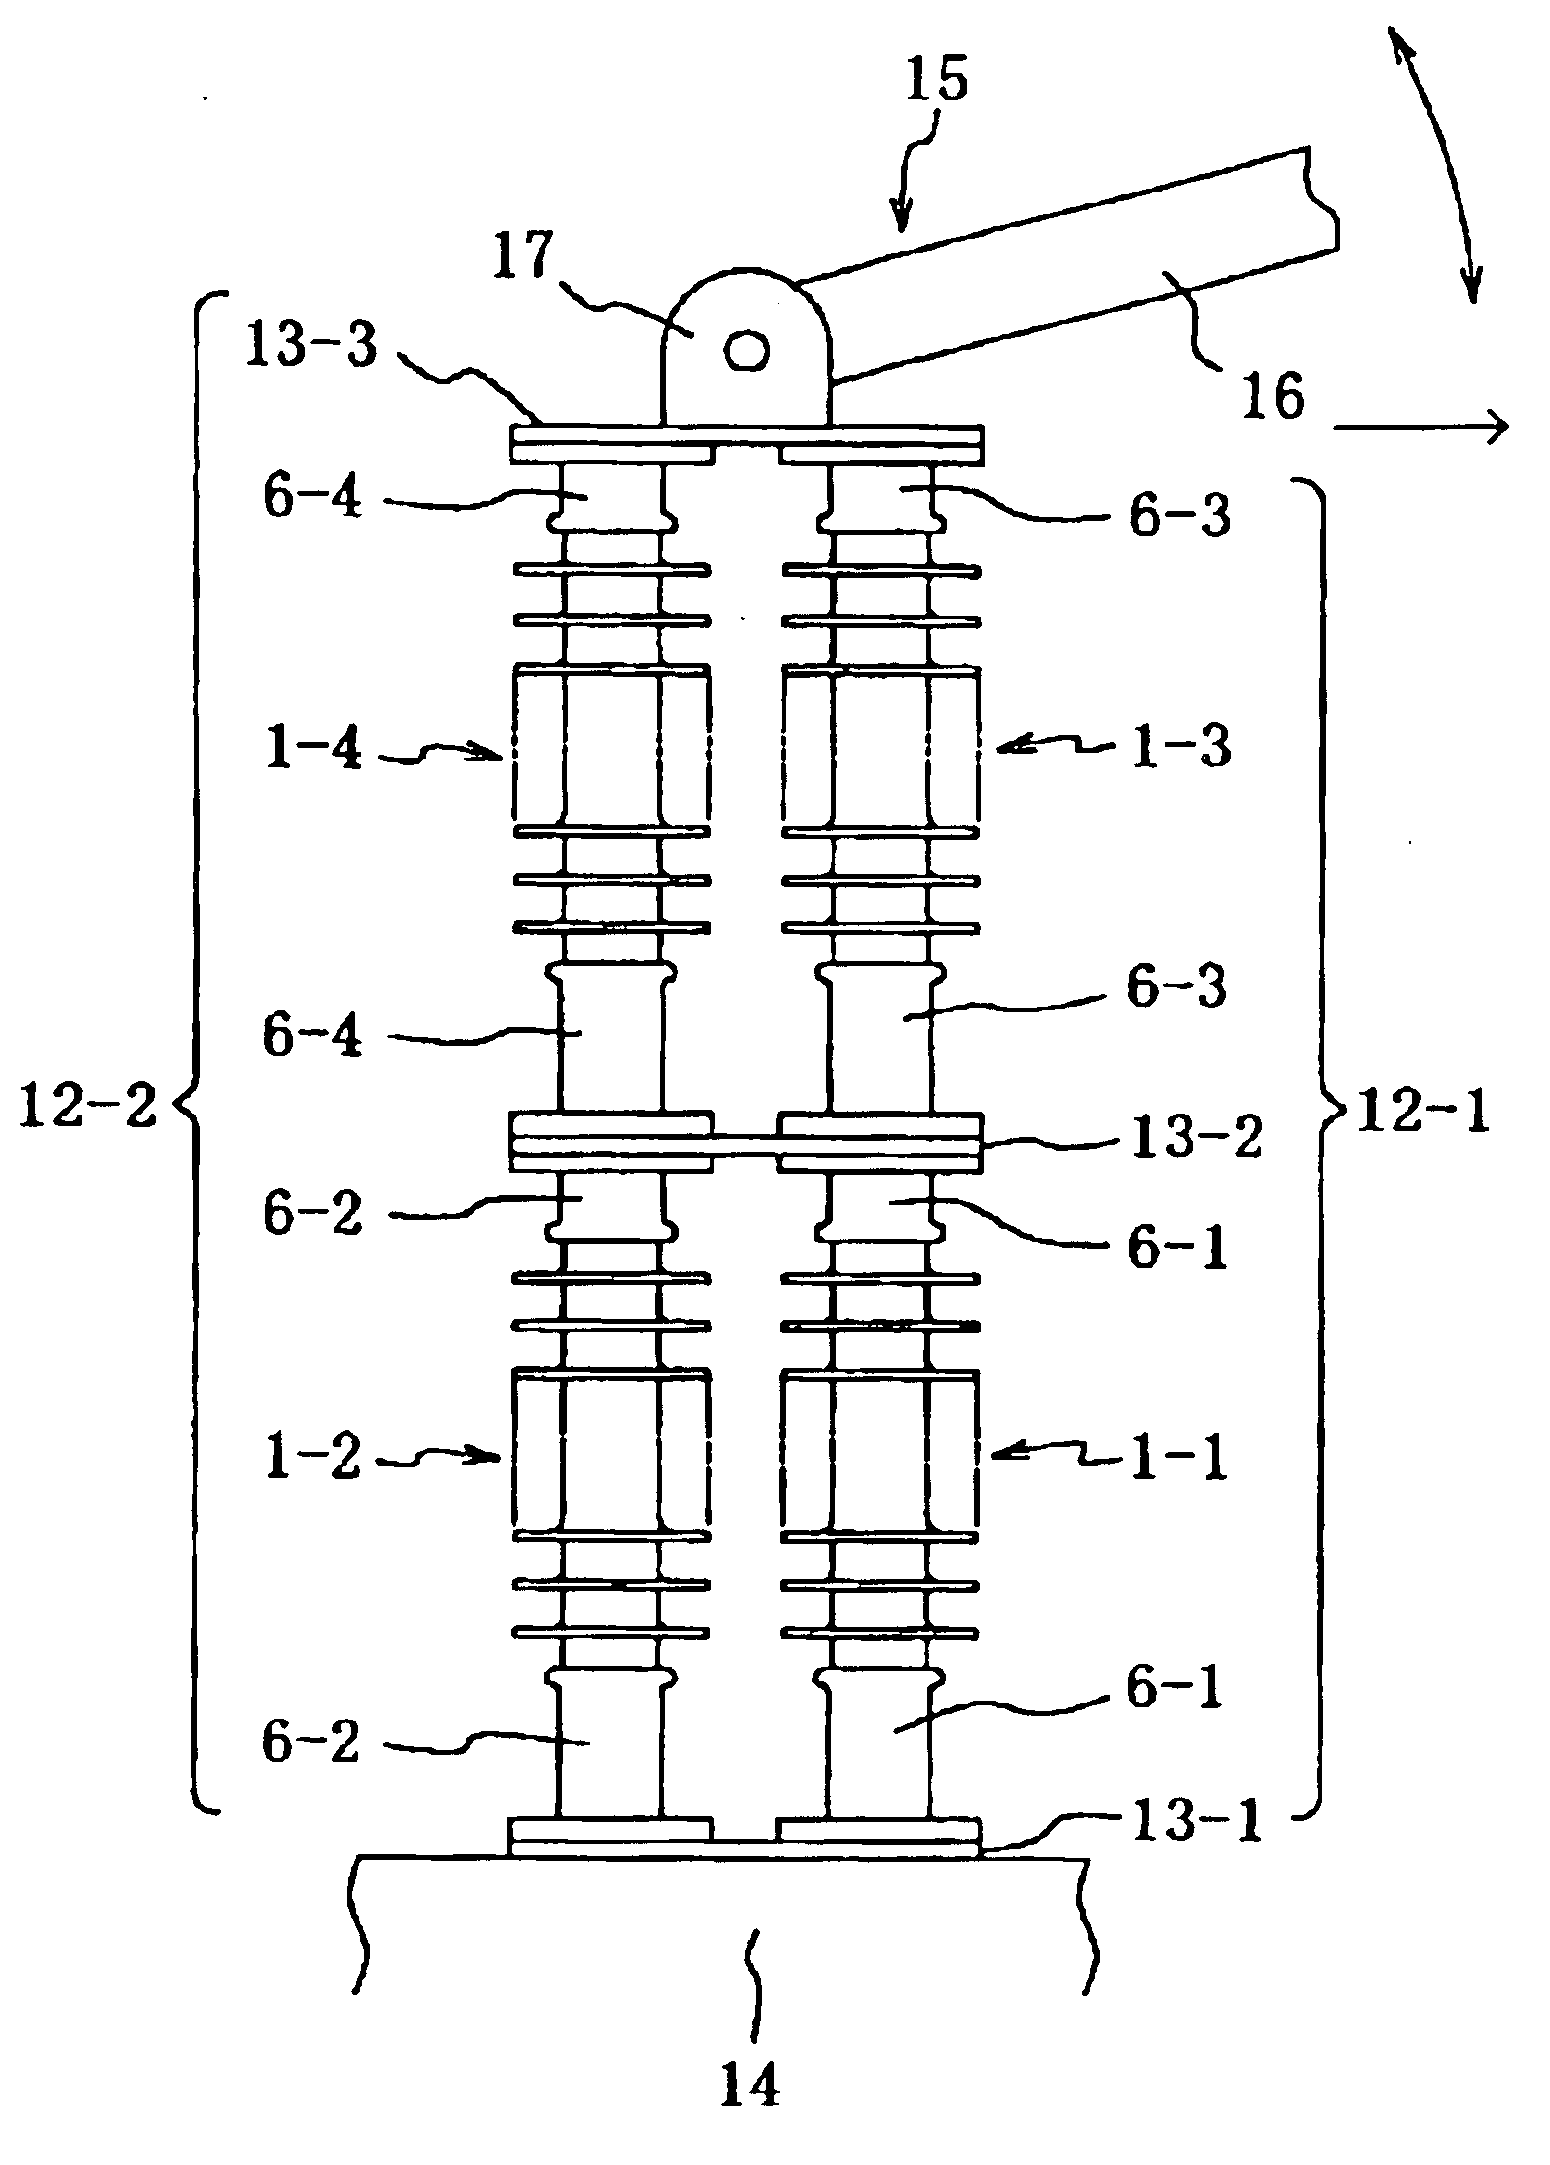 Polymer insulator apparatus and method of mounting same